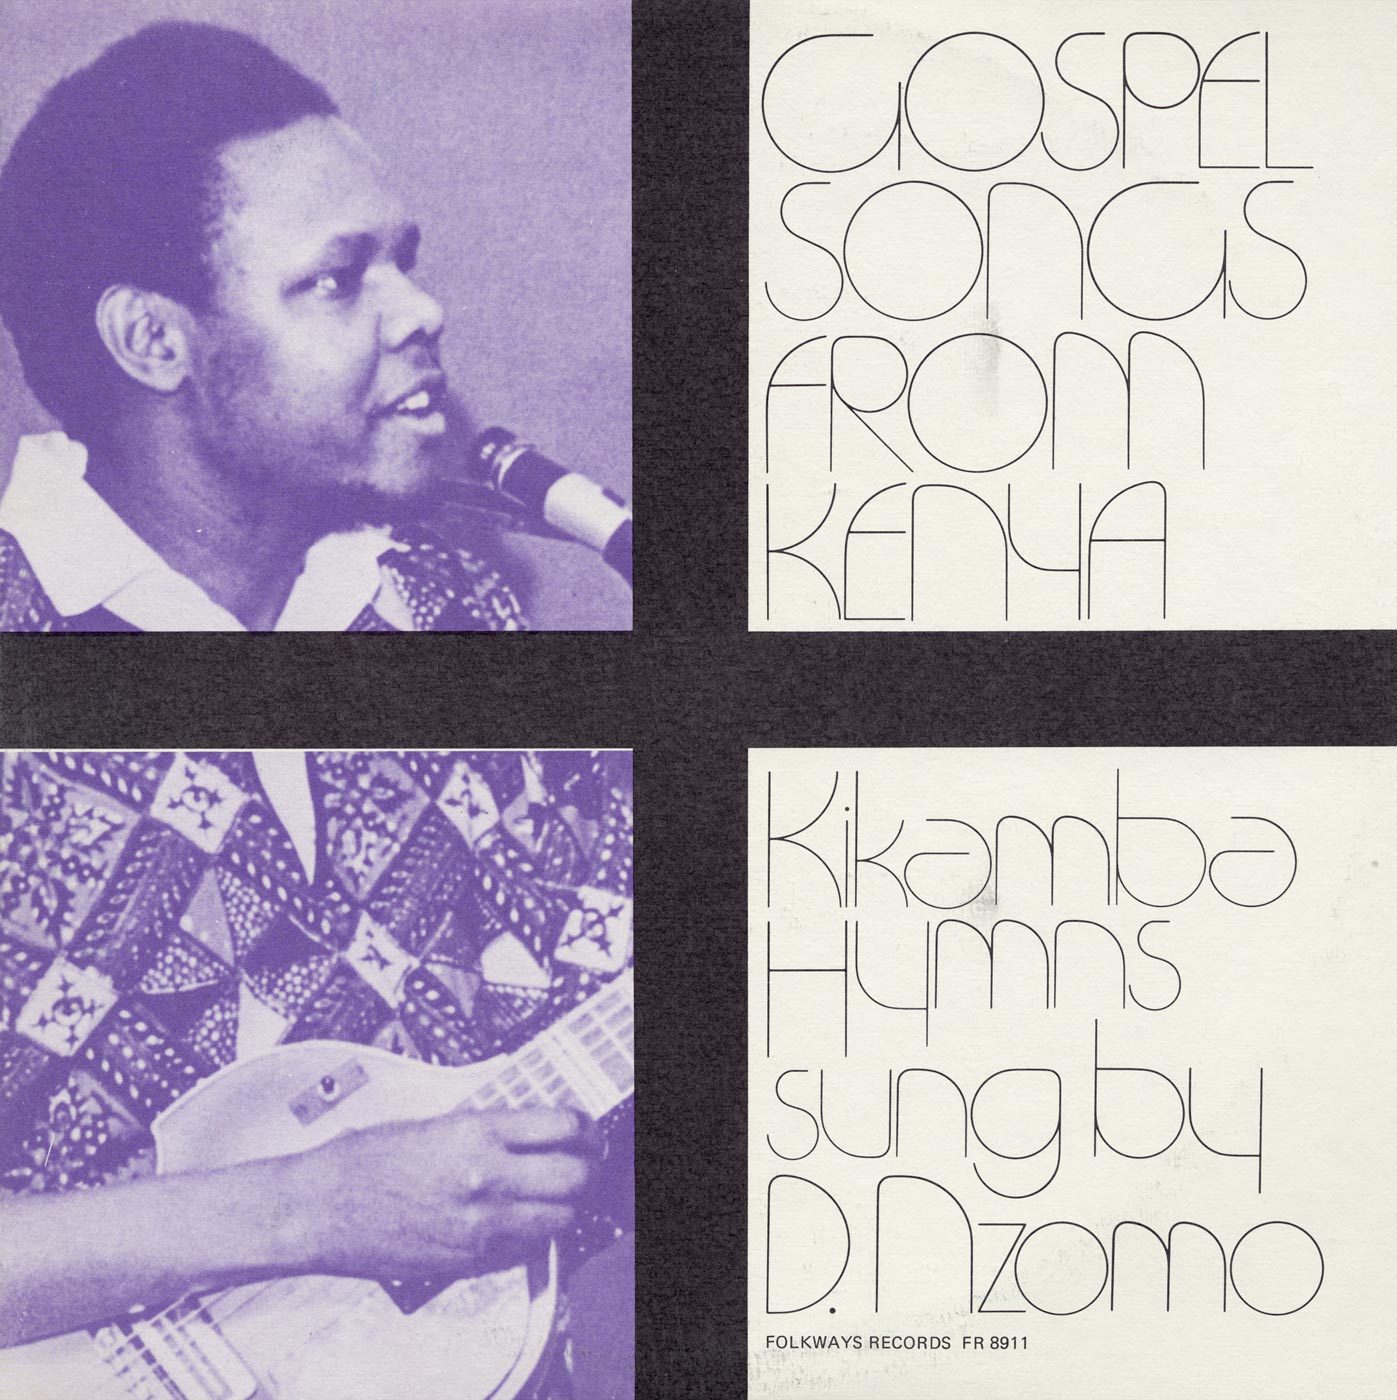 Cover of LP issue of <i>Gospel Songs from Kenya: Kikamba Hymns by David Nzomo</i>.